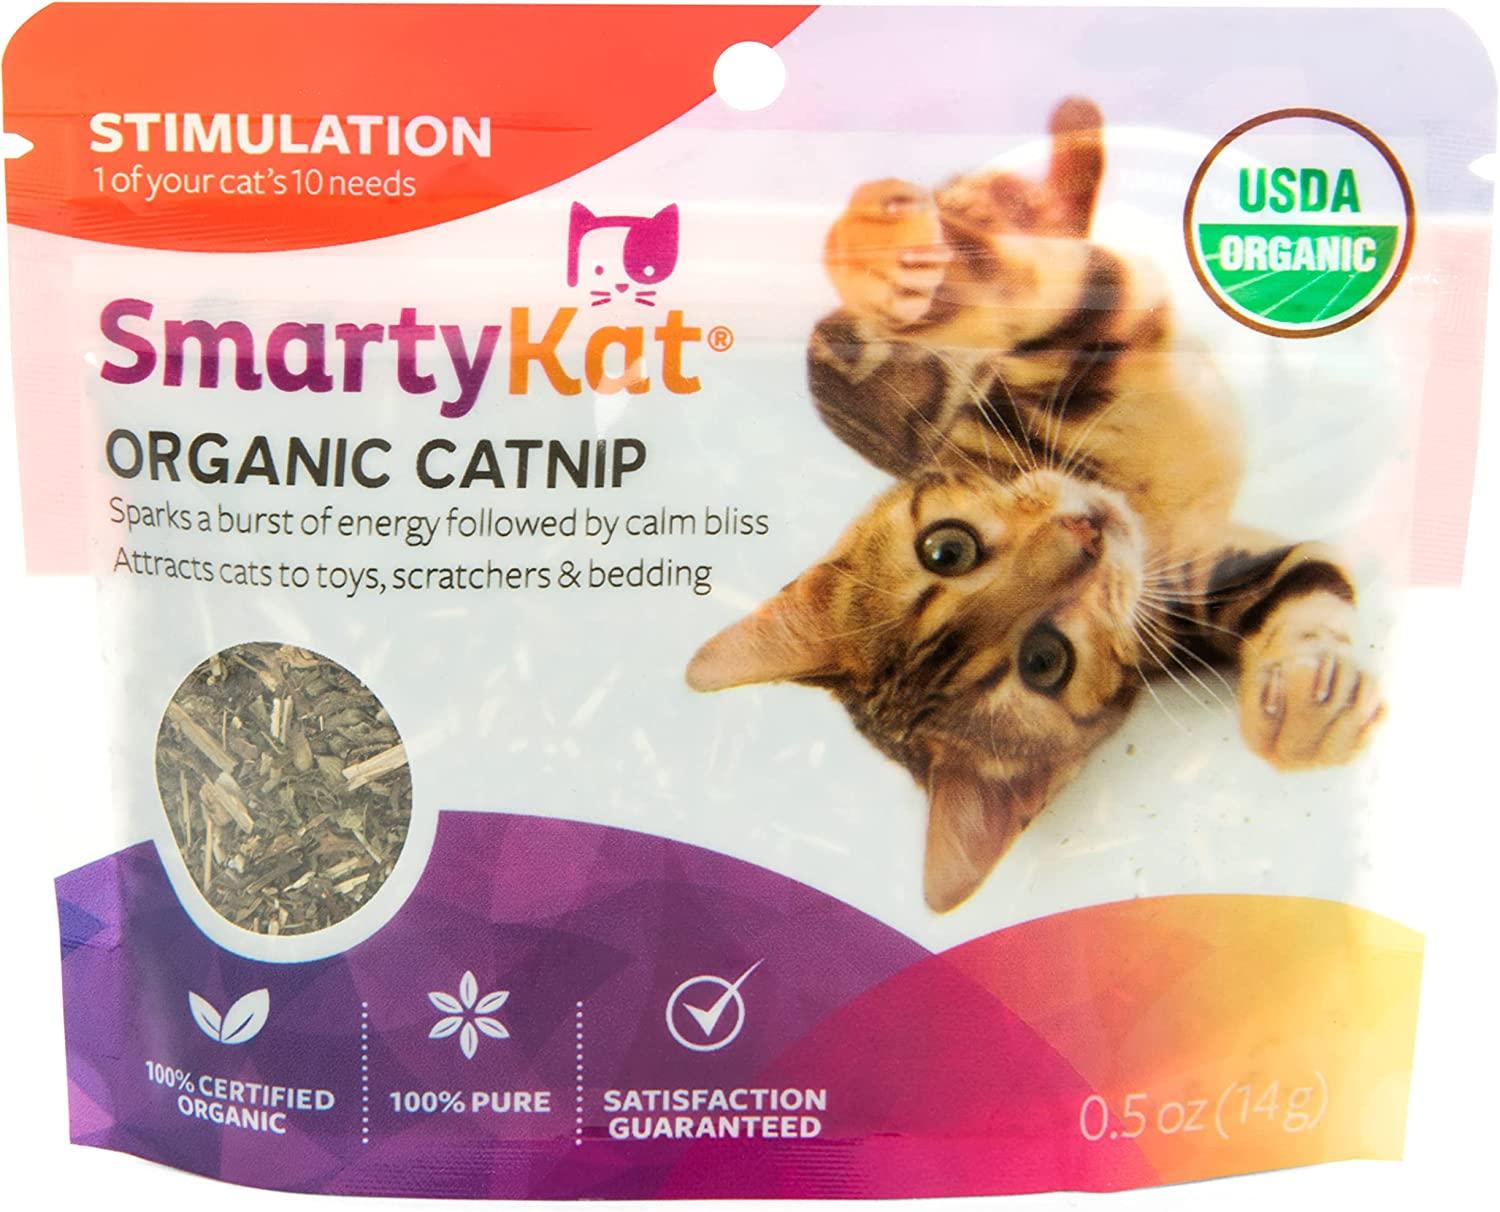 SmartyKat Organic Catnip for $1.07